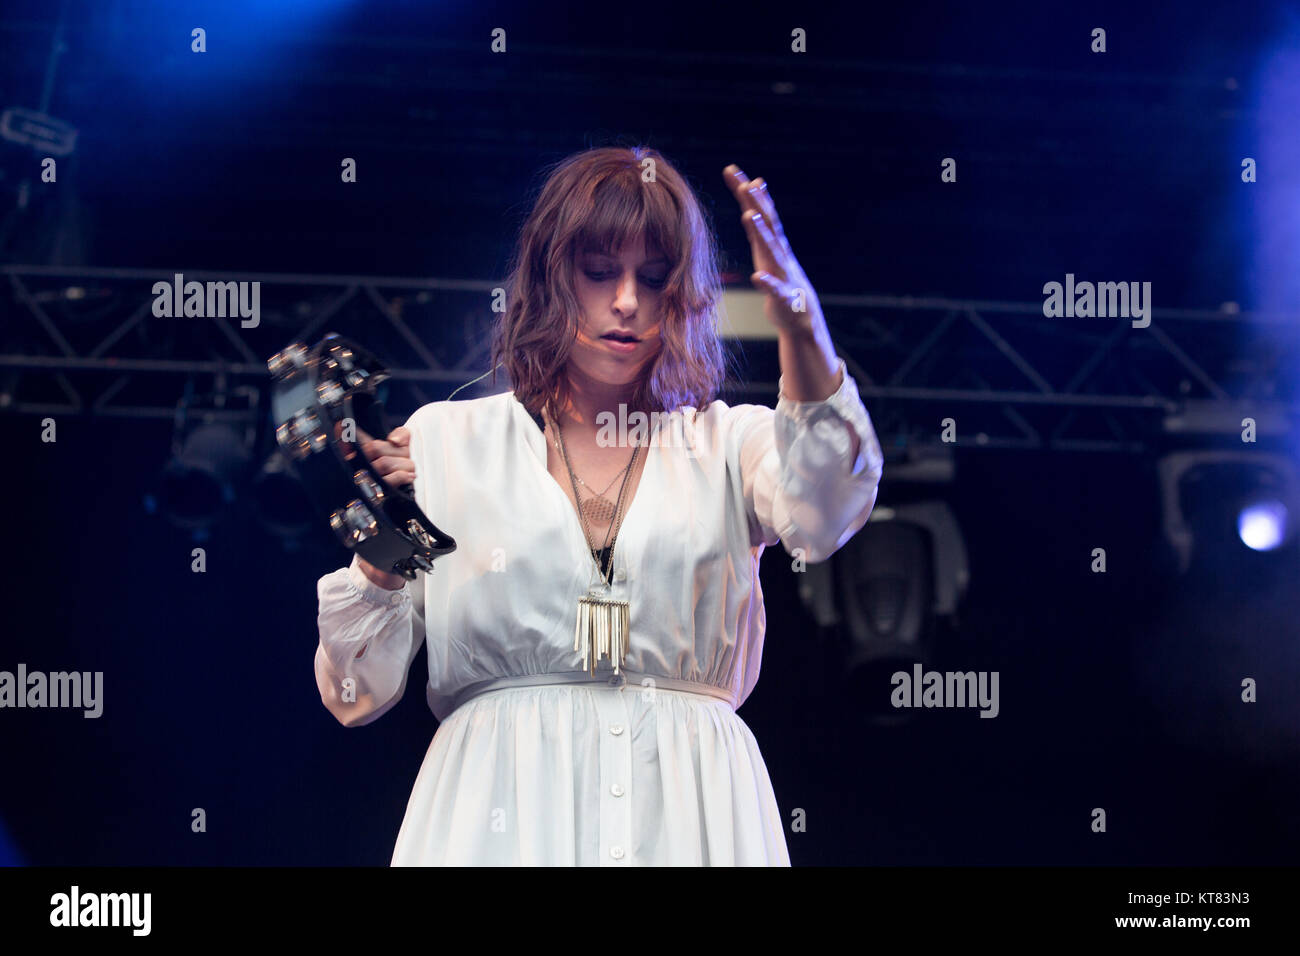 The Norwegian singer-songwriter and musician Susanne Sundfør performs a live concert at the Norwegian music festival Månefestivalen in Fredrikstad. Norway, 23/07 2016. Stock Photo